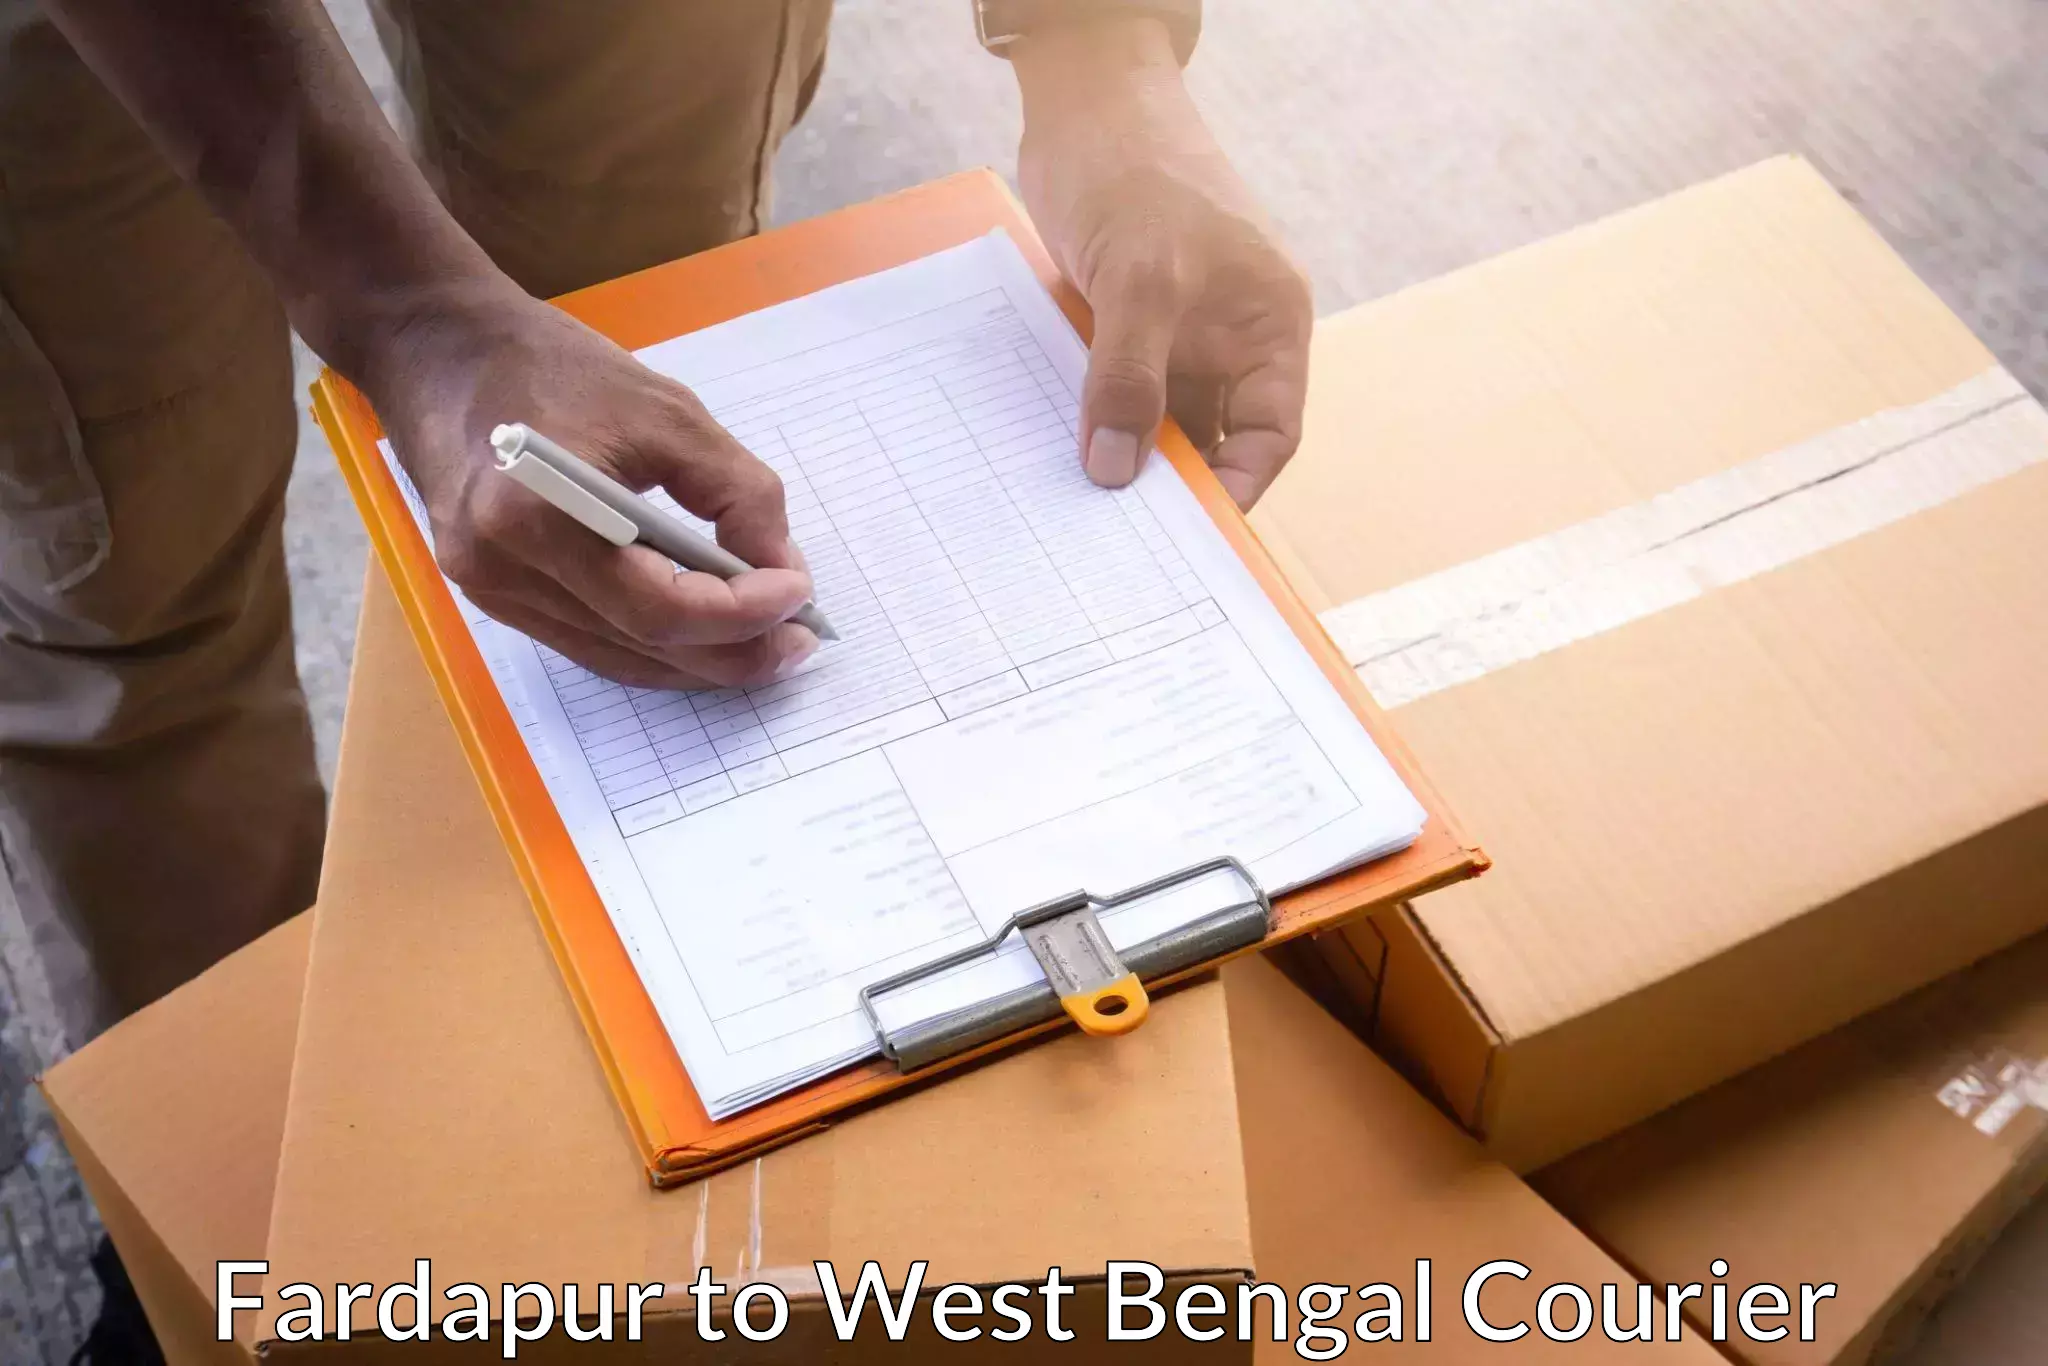 Reliable logistics providers Fardapur to Katwa